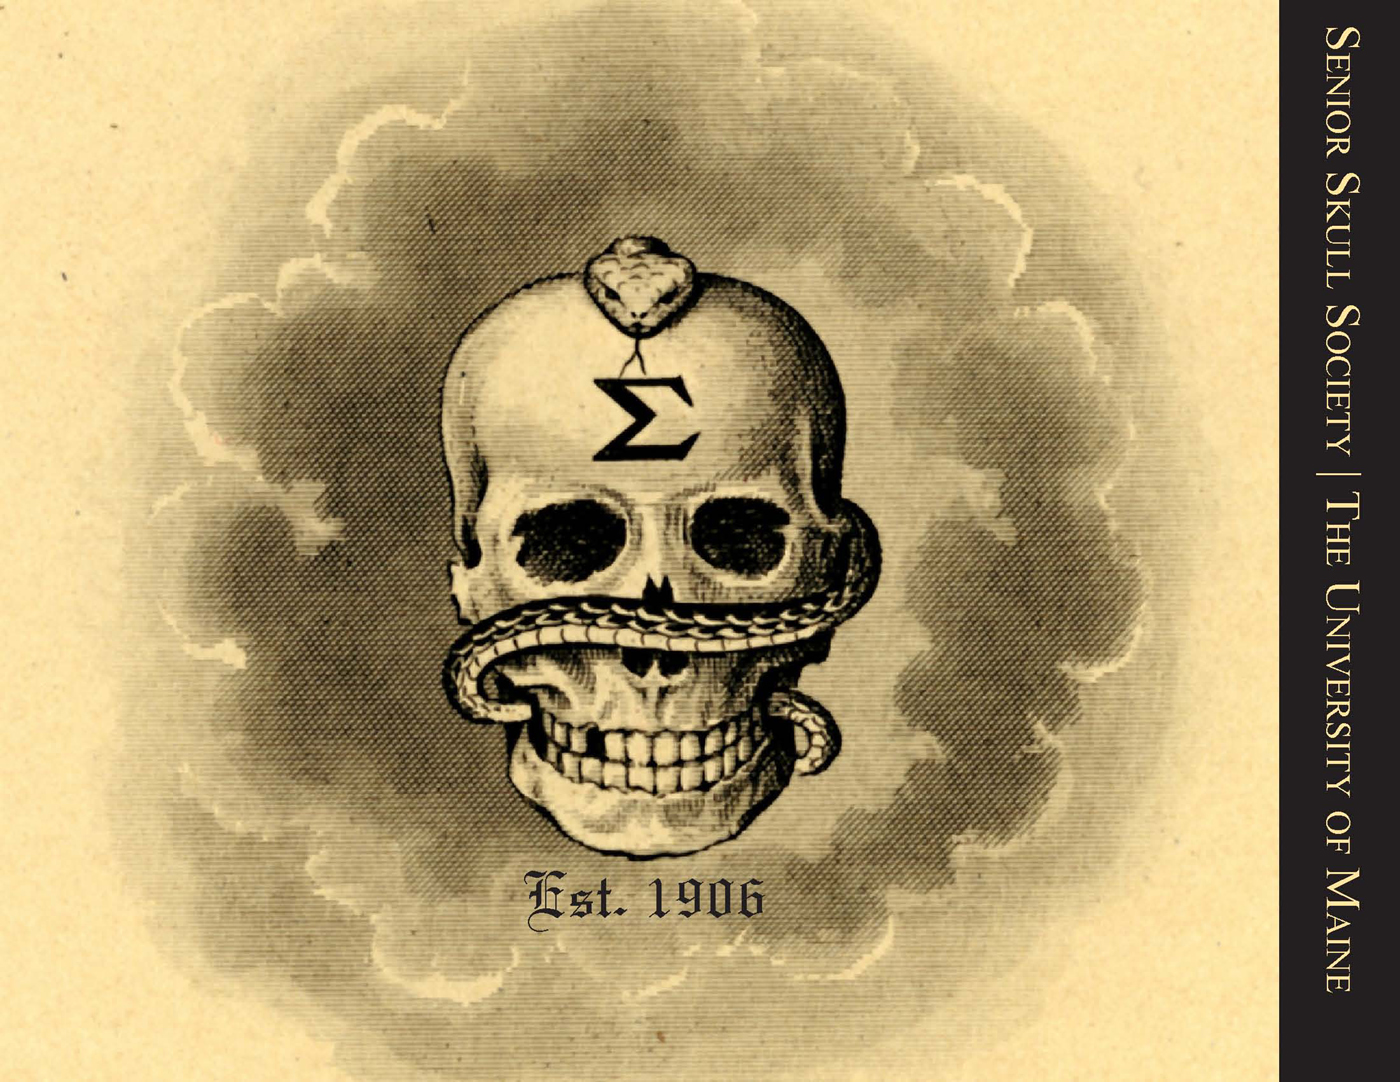 Skull And Bones Society Logo Picture